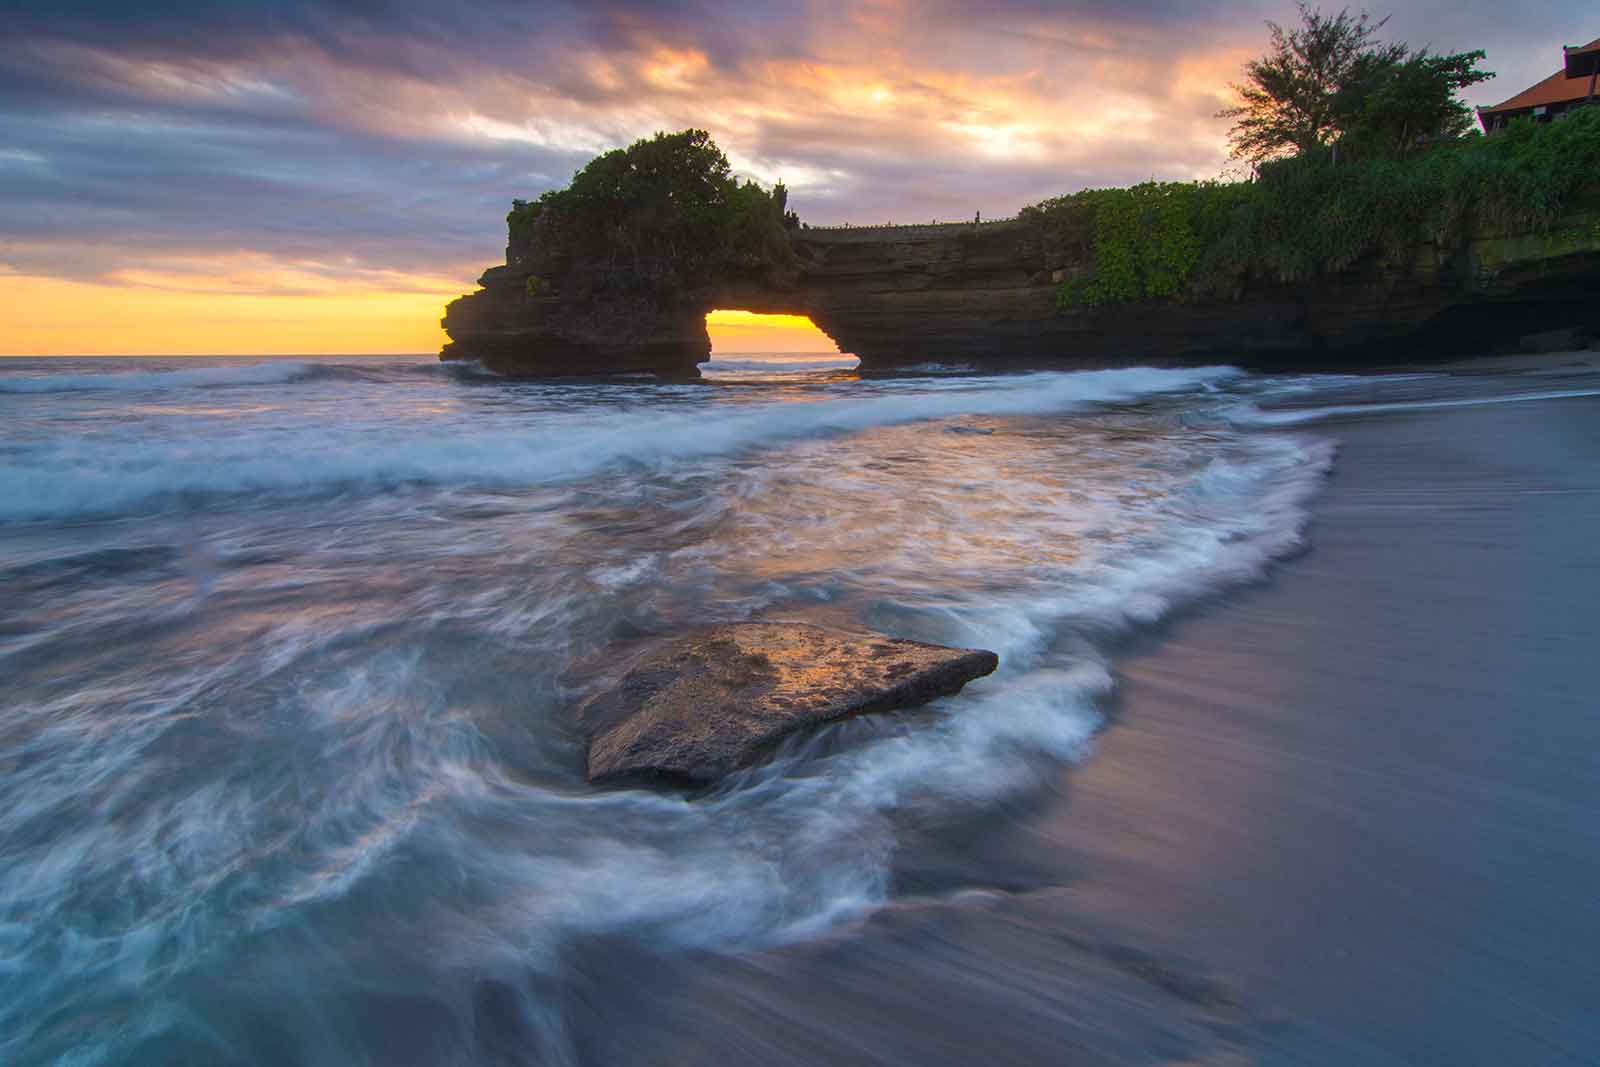 Batu Bolong Beach Bali - Complete Guide And What To Expect - Diskova Bali